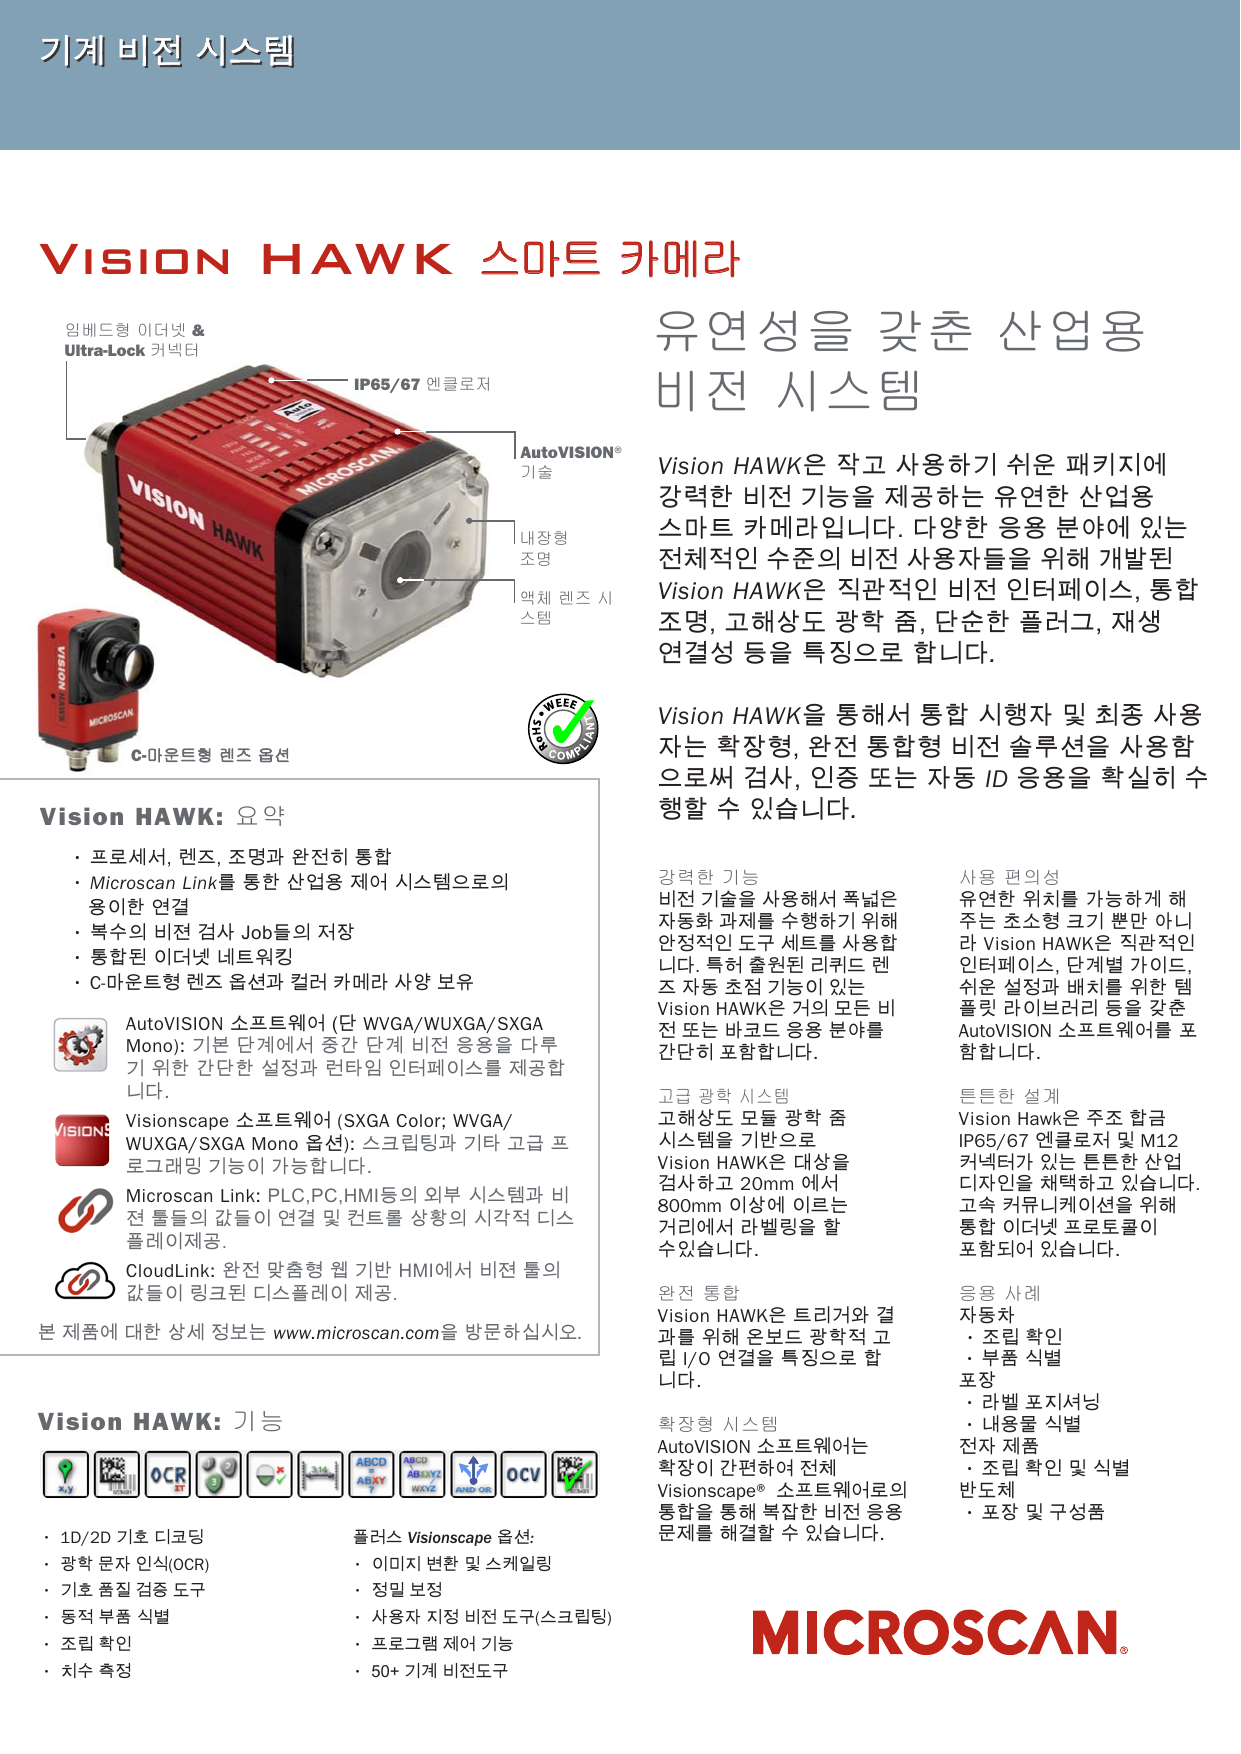 Page 1 of 2 - Visionhawk Korean